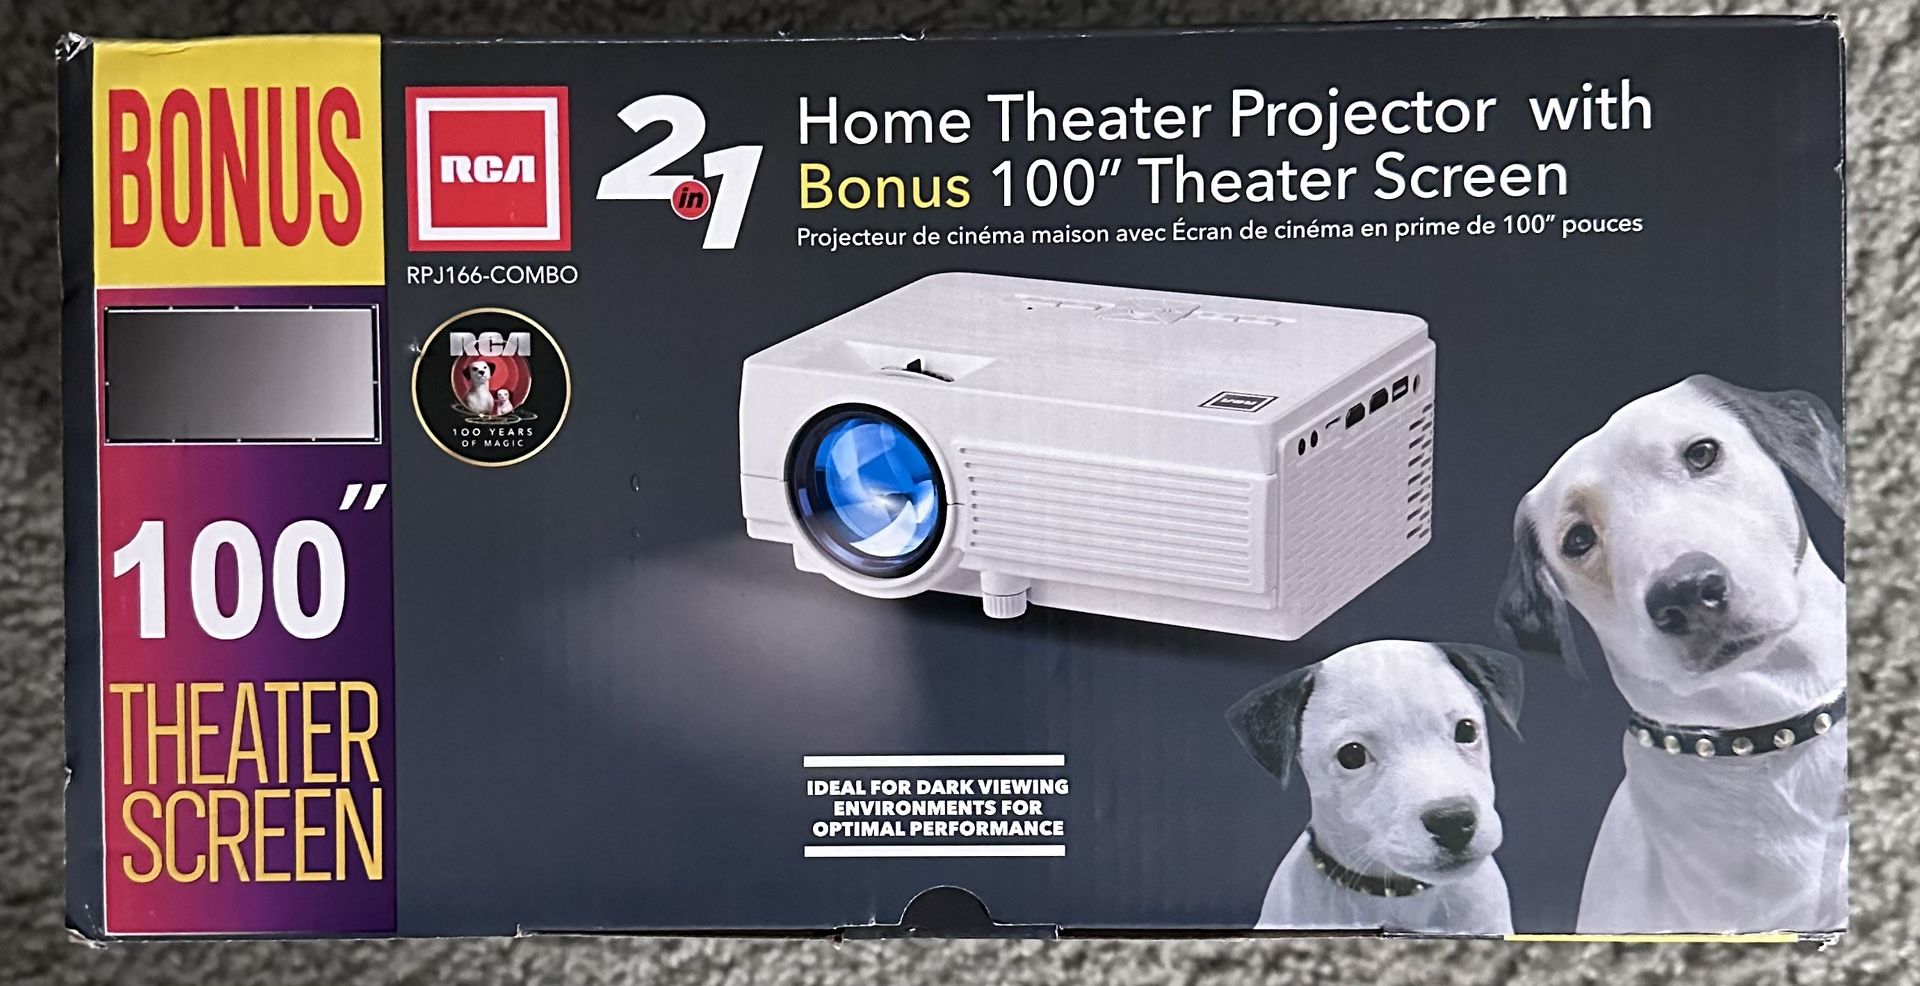 RCA Home Theatre Projector